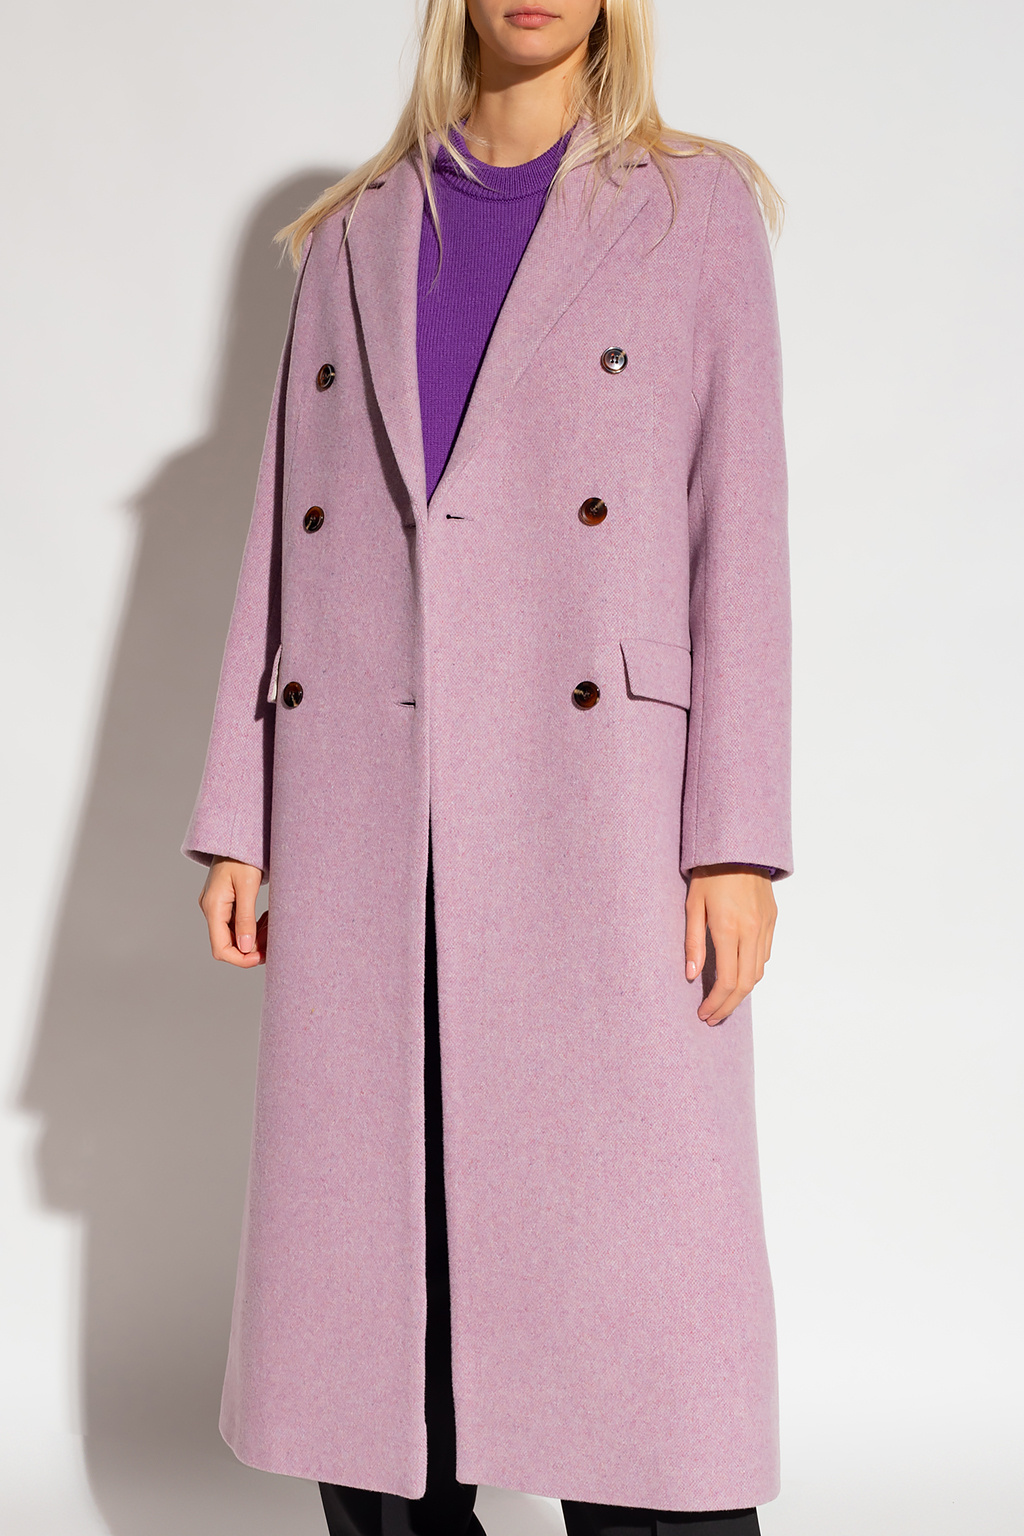 Samsøe 'Falcon' coat | Women's Clothing |